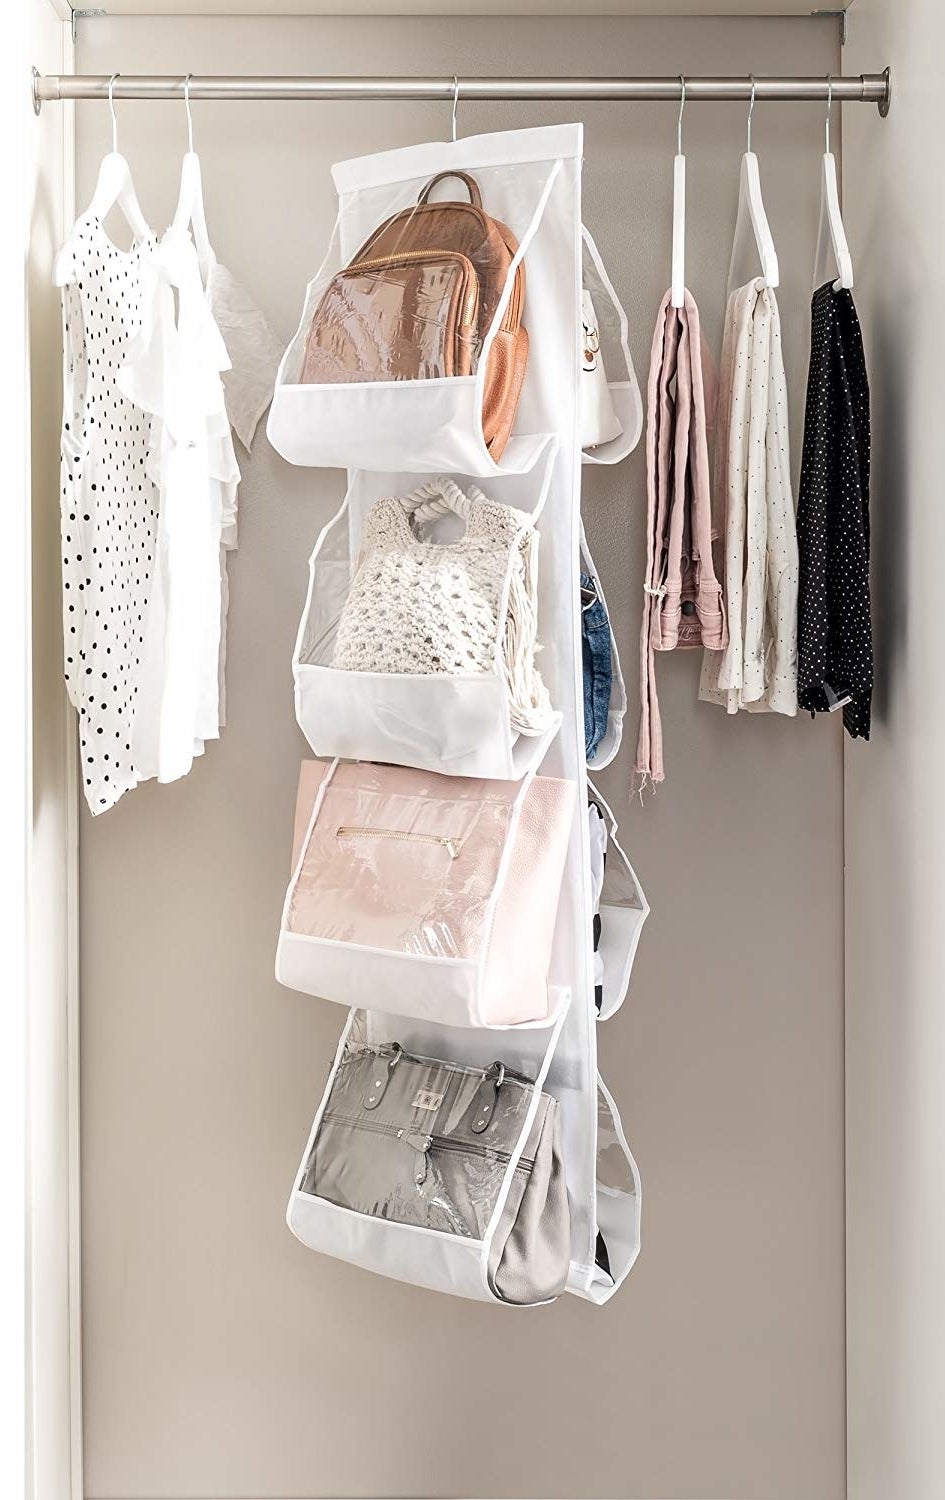 vertical purse organizer hanging in the closet